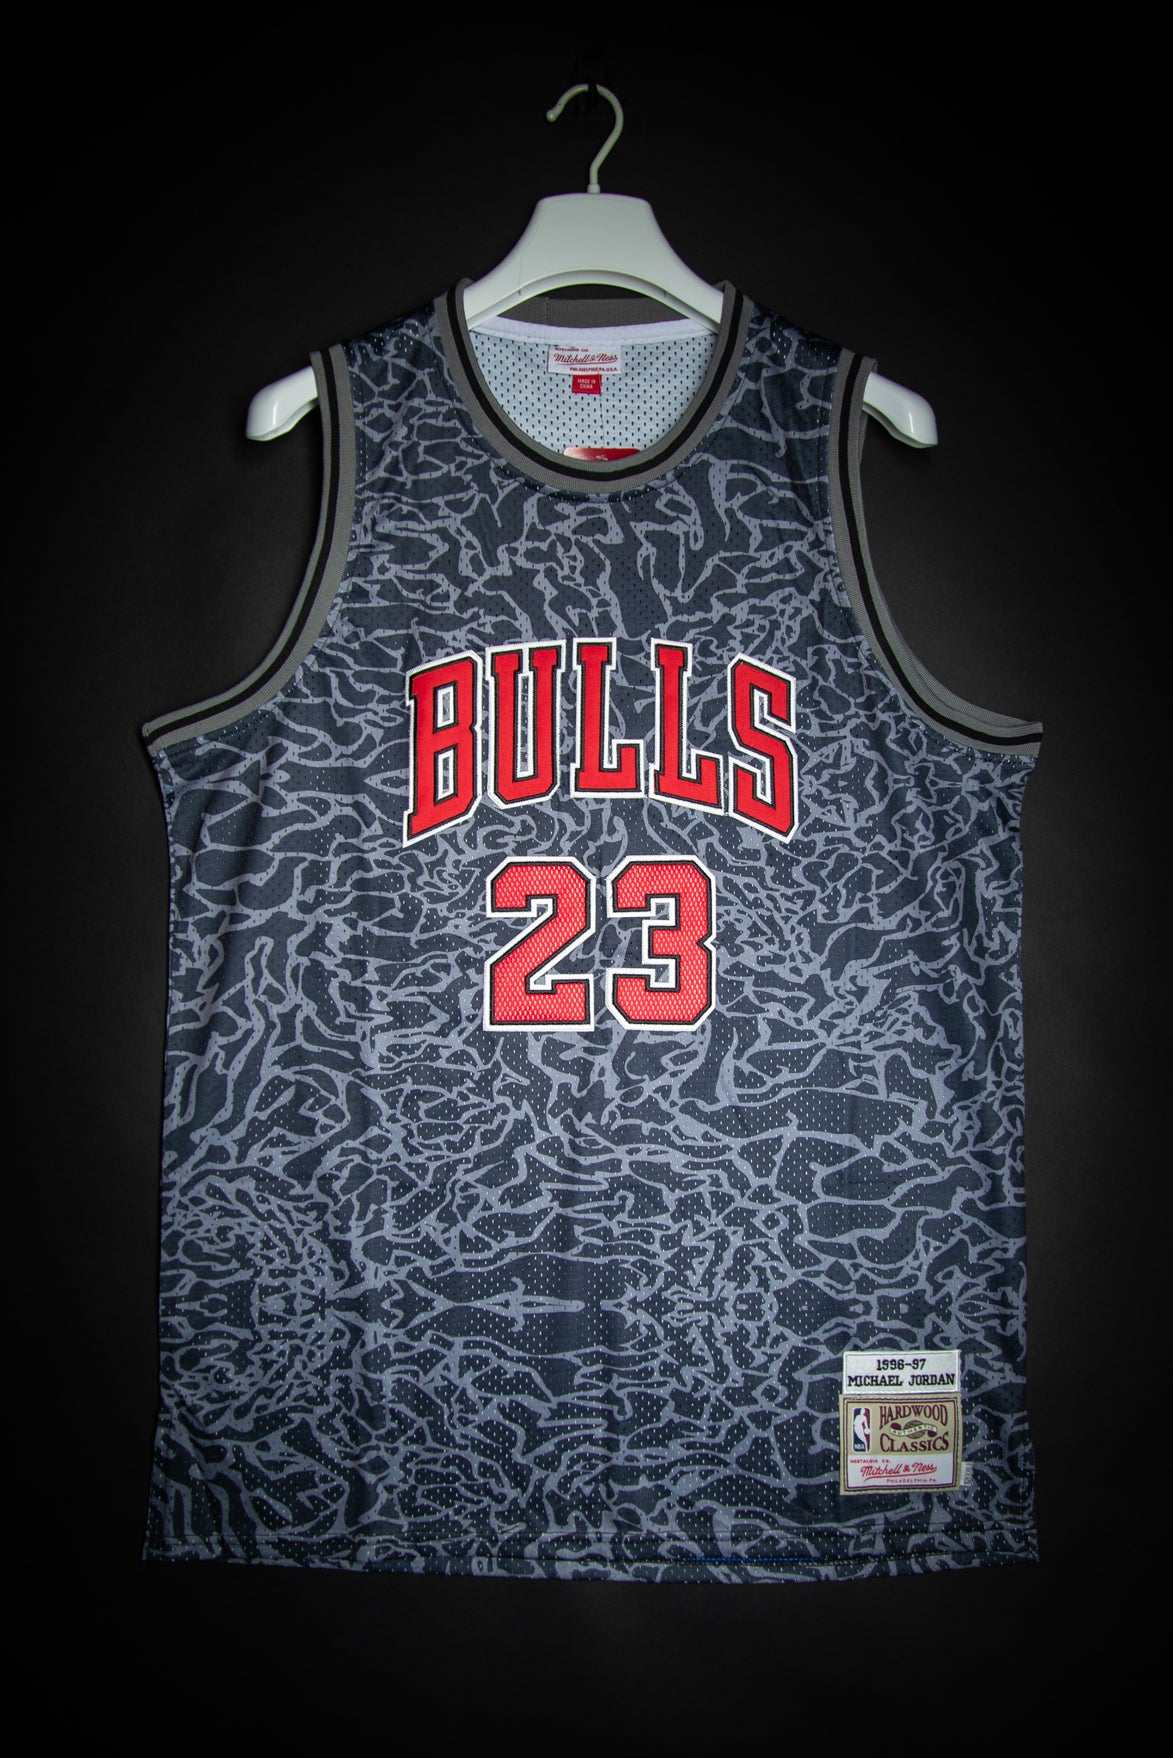 bulls 1996 97